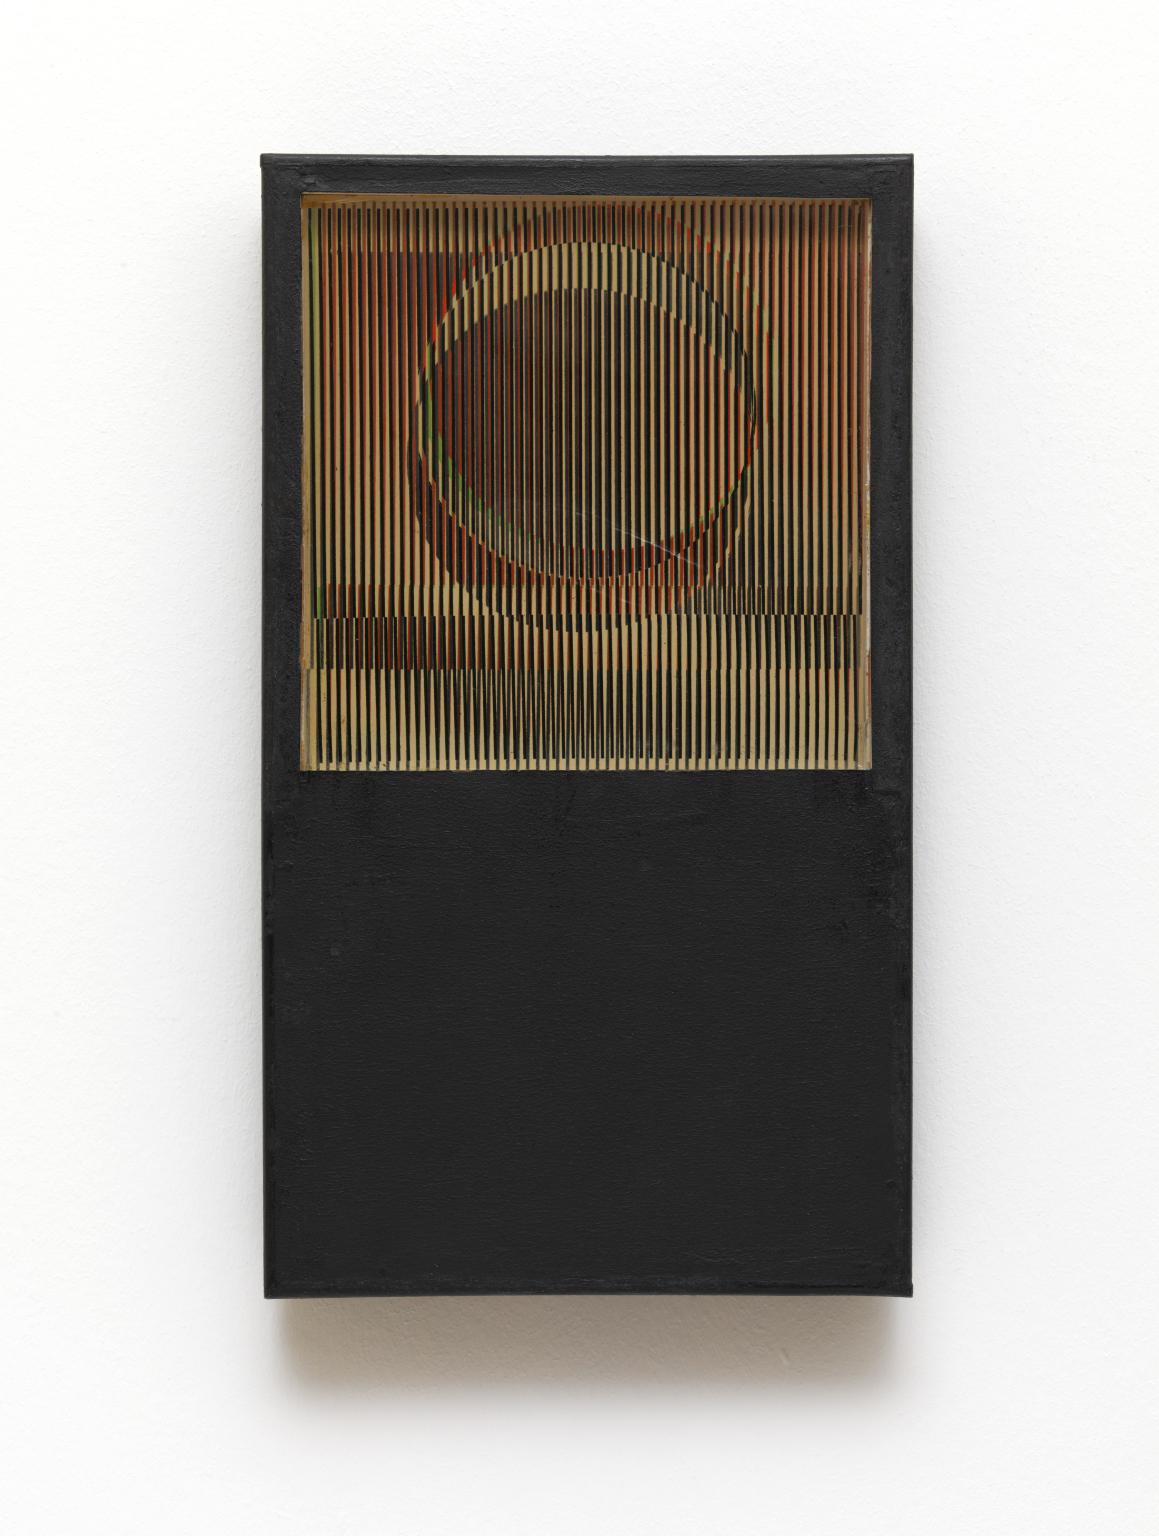 Carlos Cruz-Diez, Physichromie Nr. 123, 1964, Tate Modern, London.